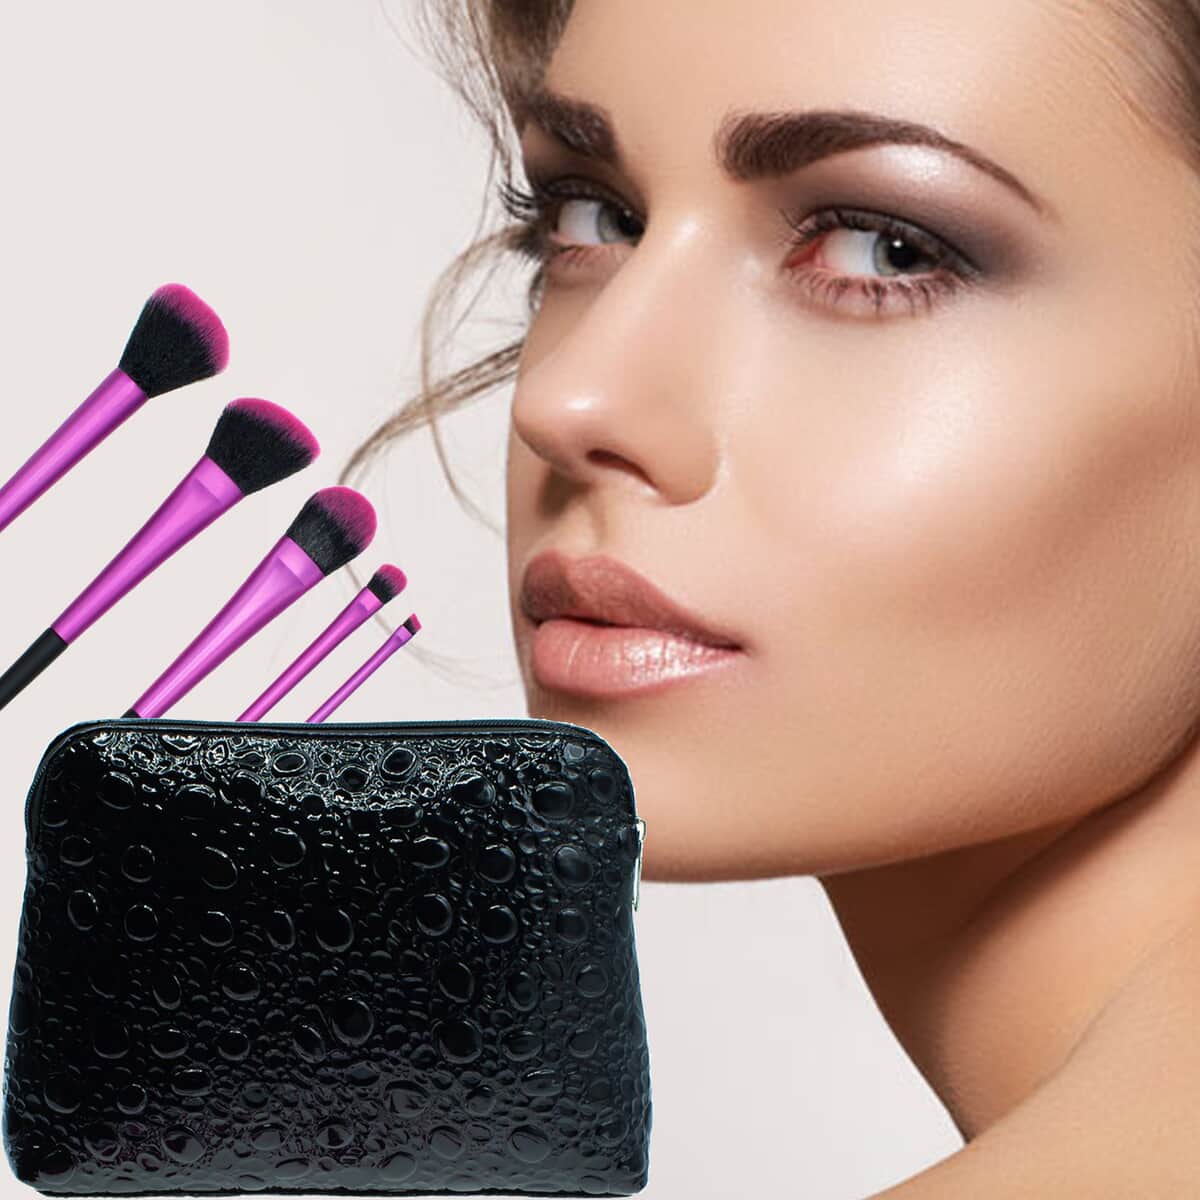 Bubble Textured Black Vegan Leather Bag with Pink Brushes | Cosmetic Bag | Makeup Bag | Makeup Pouch | Travel Makeup Bag image number 1